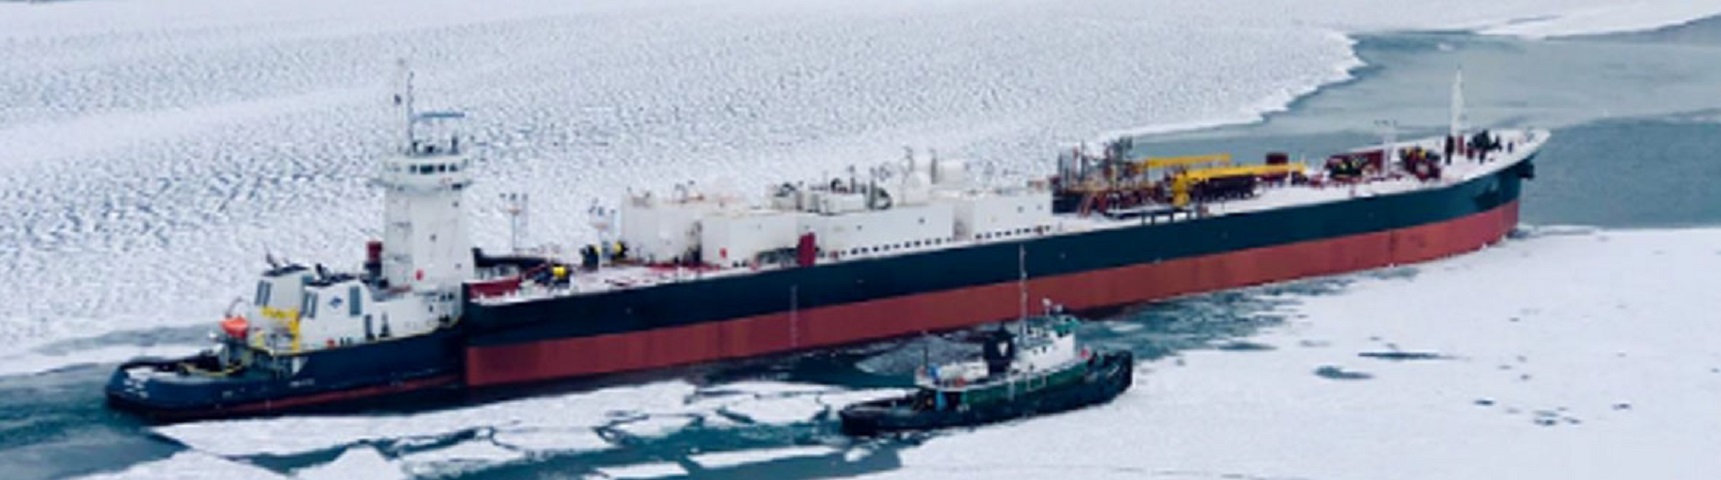 Cargo Ship on Ice